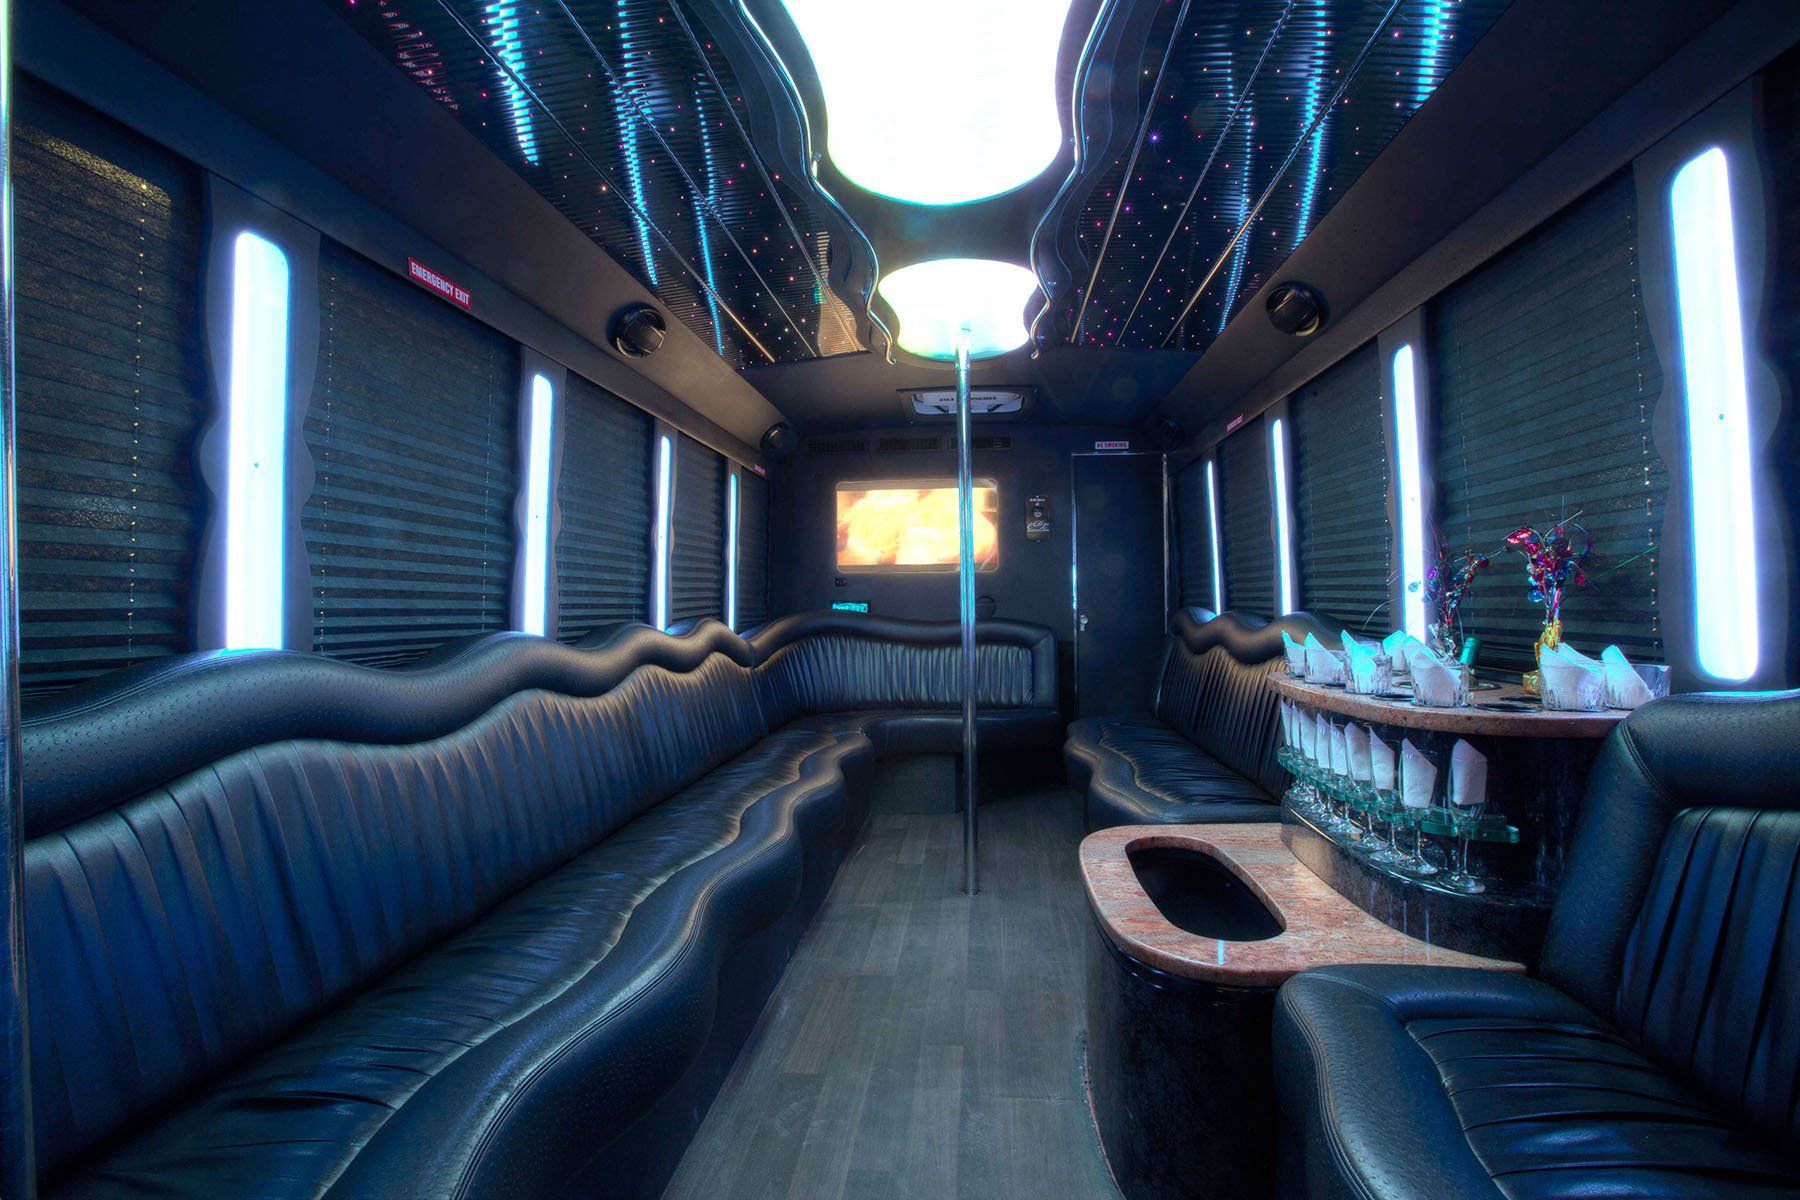 white 20 passenger party bus interior